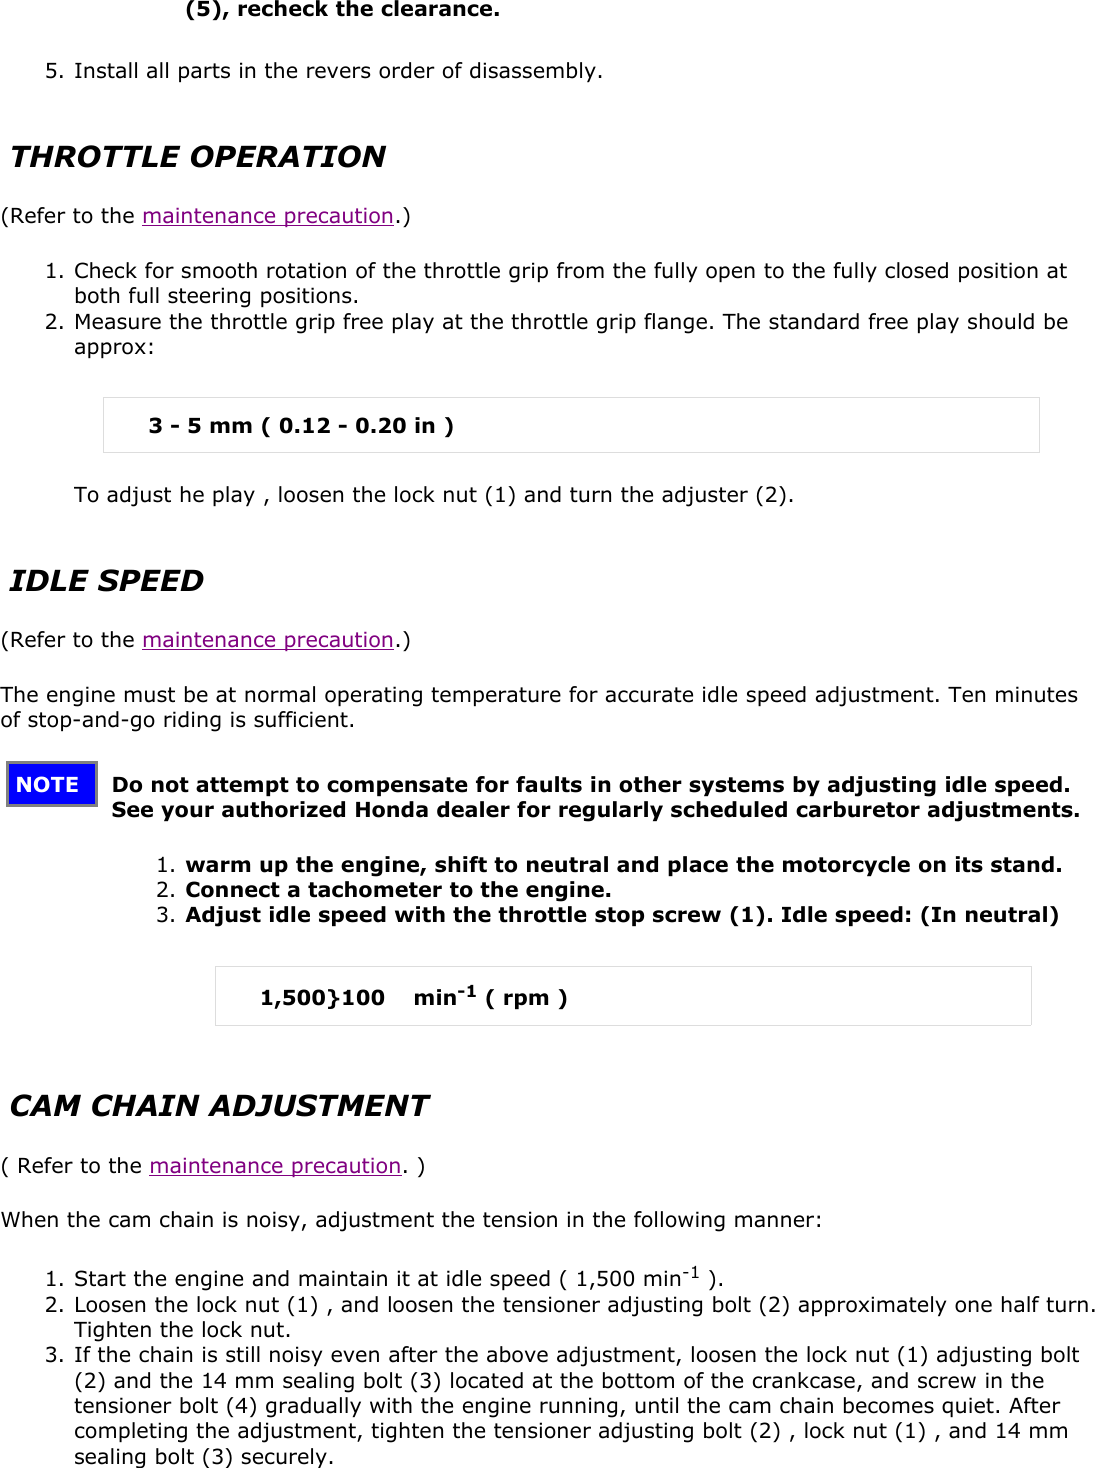 Page 8 of 10 - Honda Honda-Ct110-Users-Manual-  Honda-ct110-users-manual